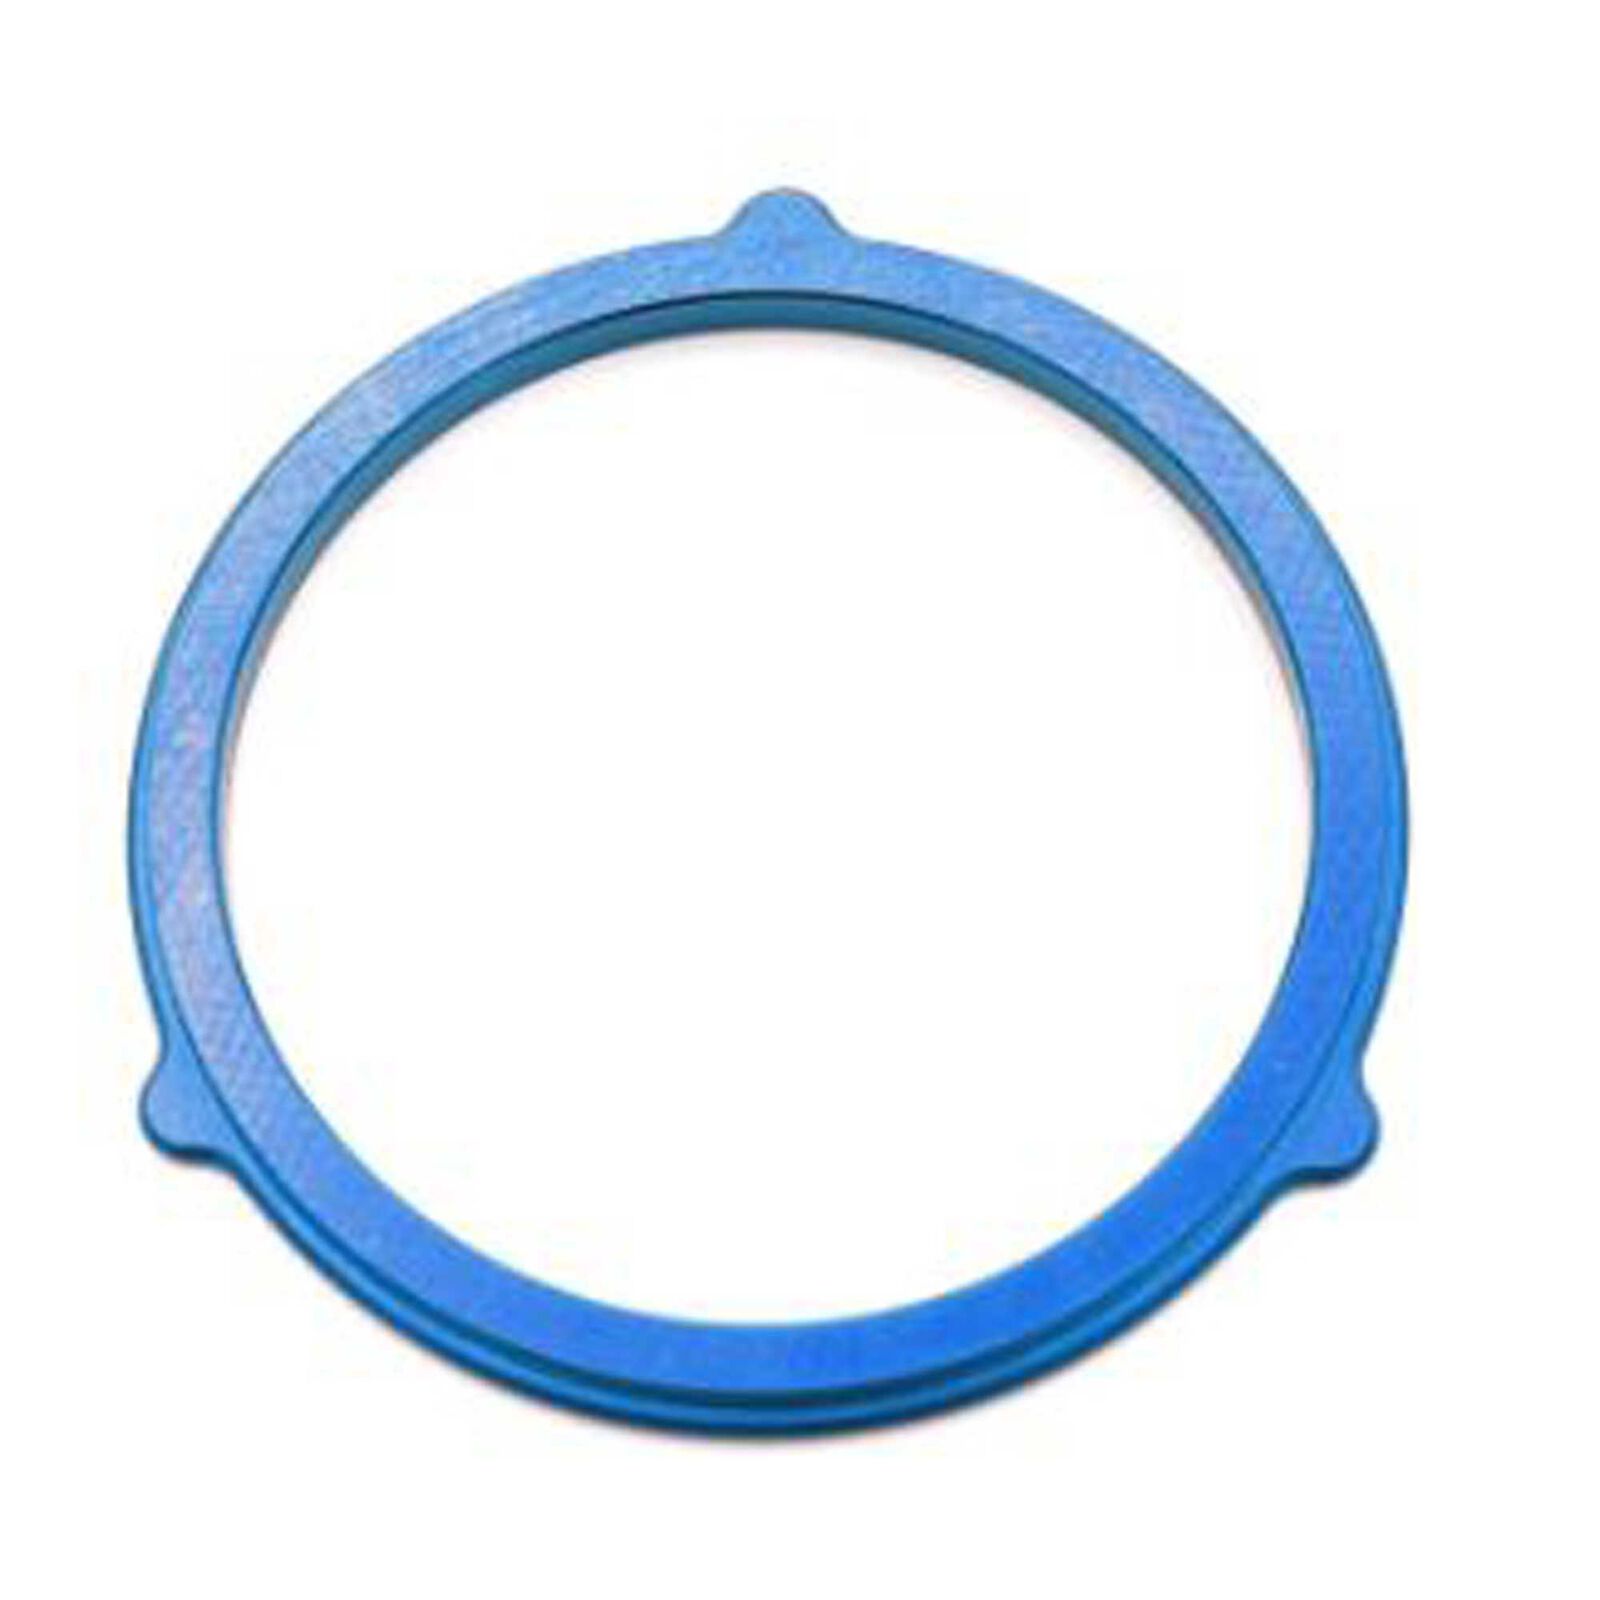 1.9 IFR Slim Inner Ring Blue Anodized